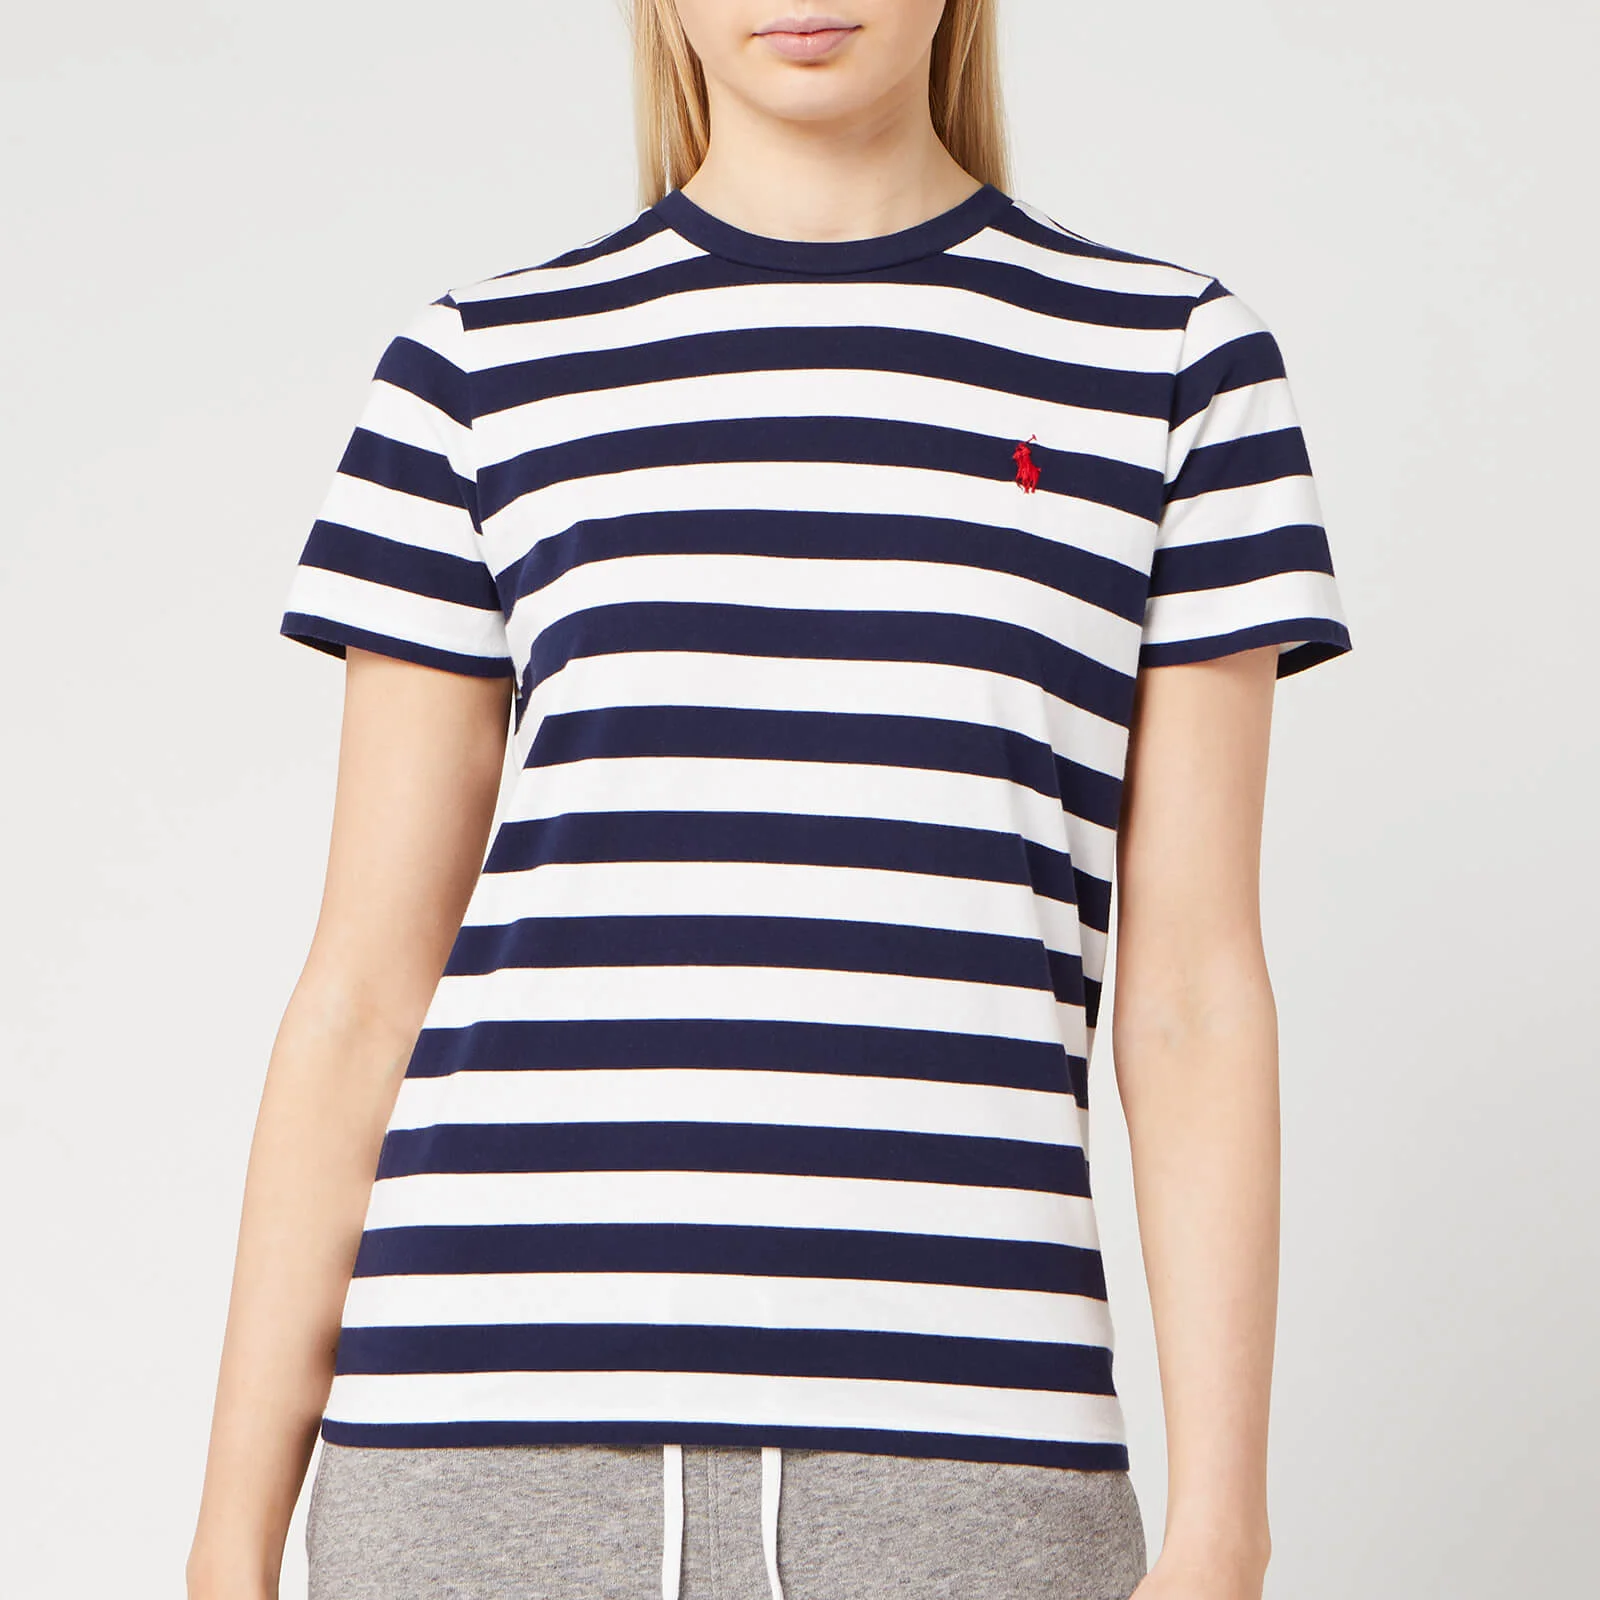 Polo Ralph Lauren Women's Stripe T-Shirt - Cruise Navy/White Image 1